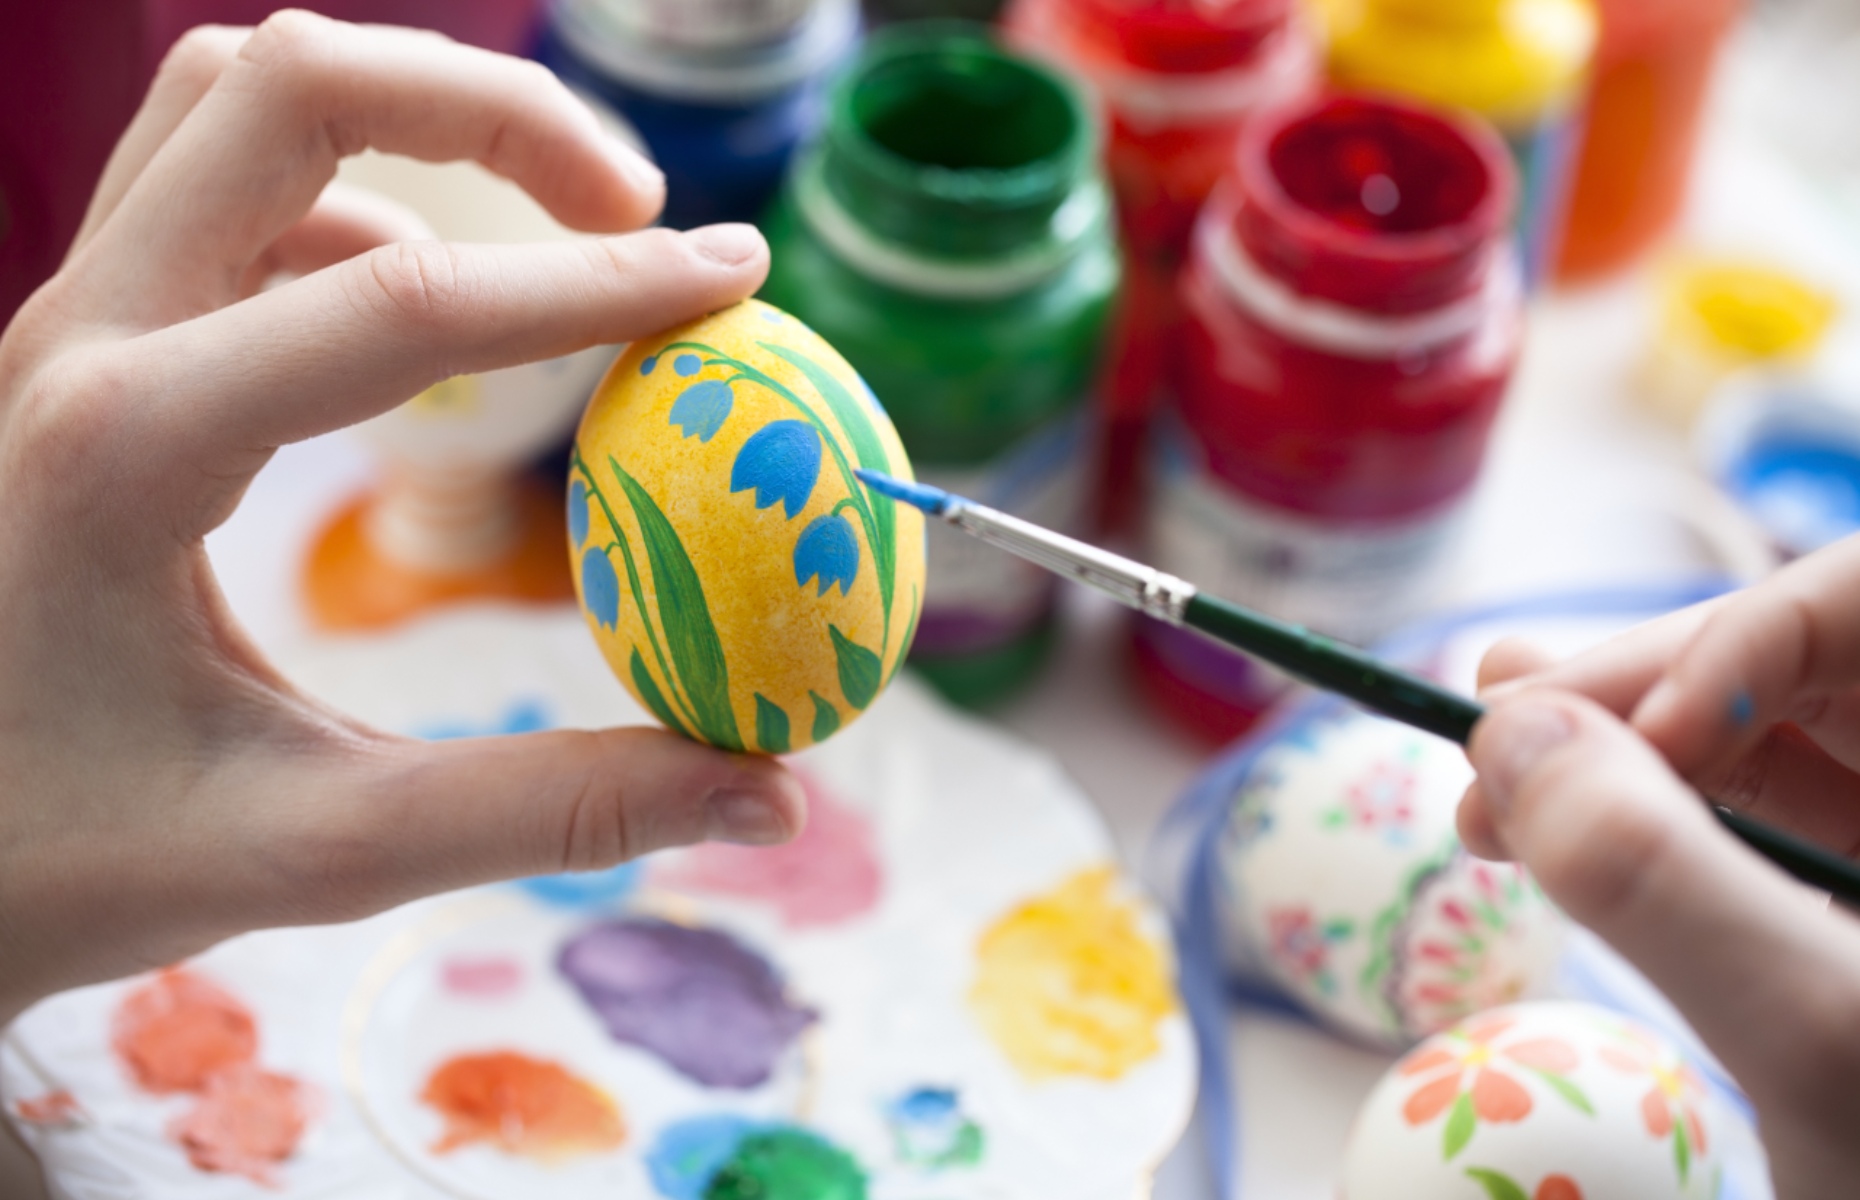 Painting eggs (Image: Liliya Kulianionak/Shutterstock)